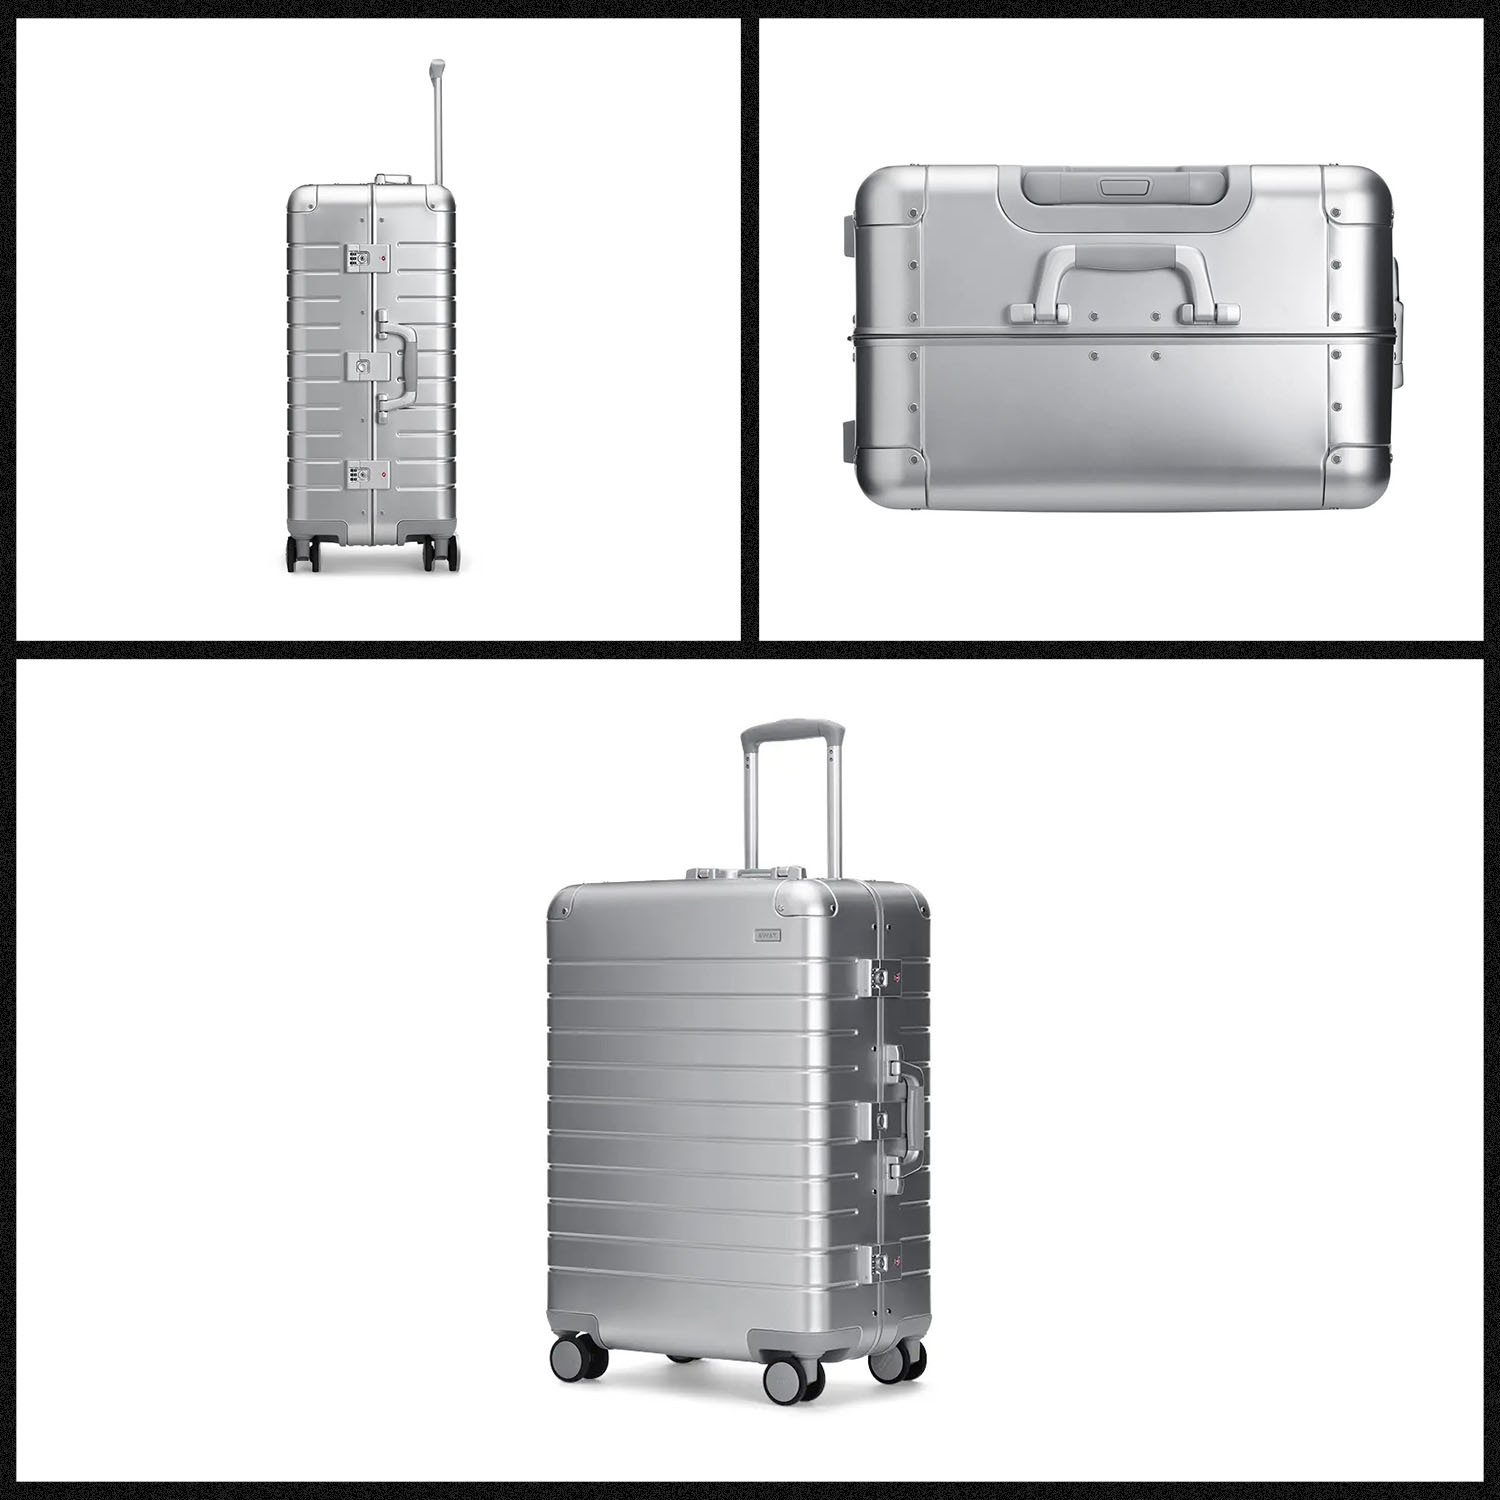 10 Best Luggage Brands for Smart Travel - InsideHook